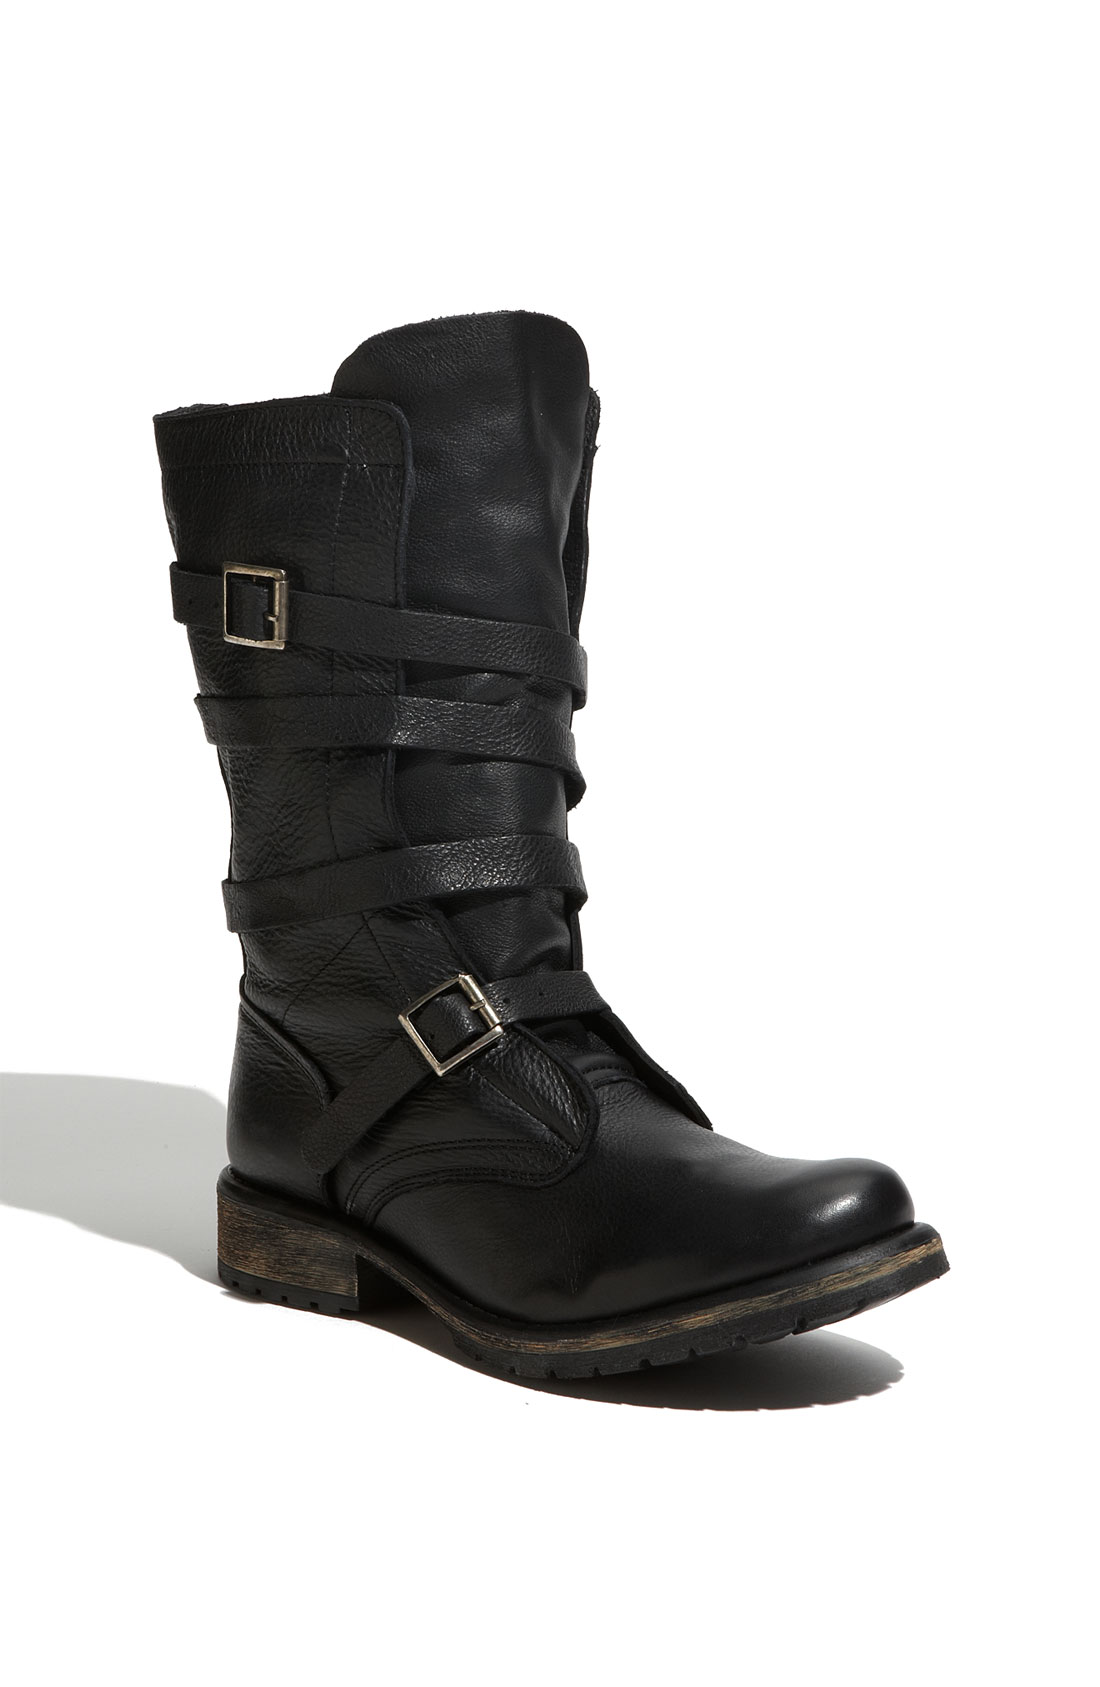 Steve Madden Banddit Buckle Boot in Black (black leather) | Lyst